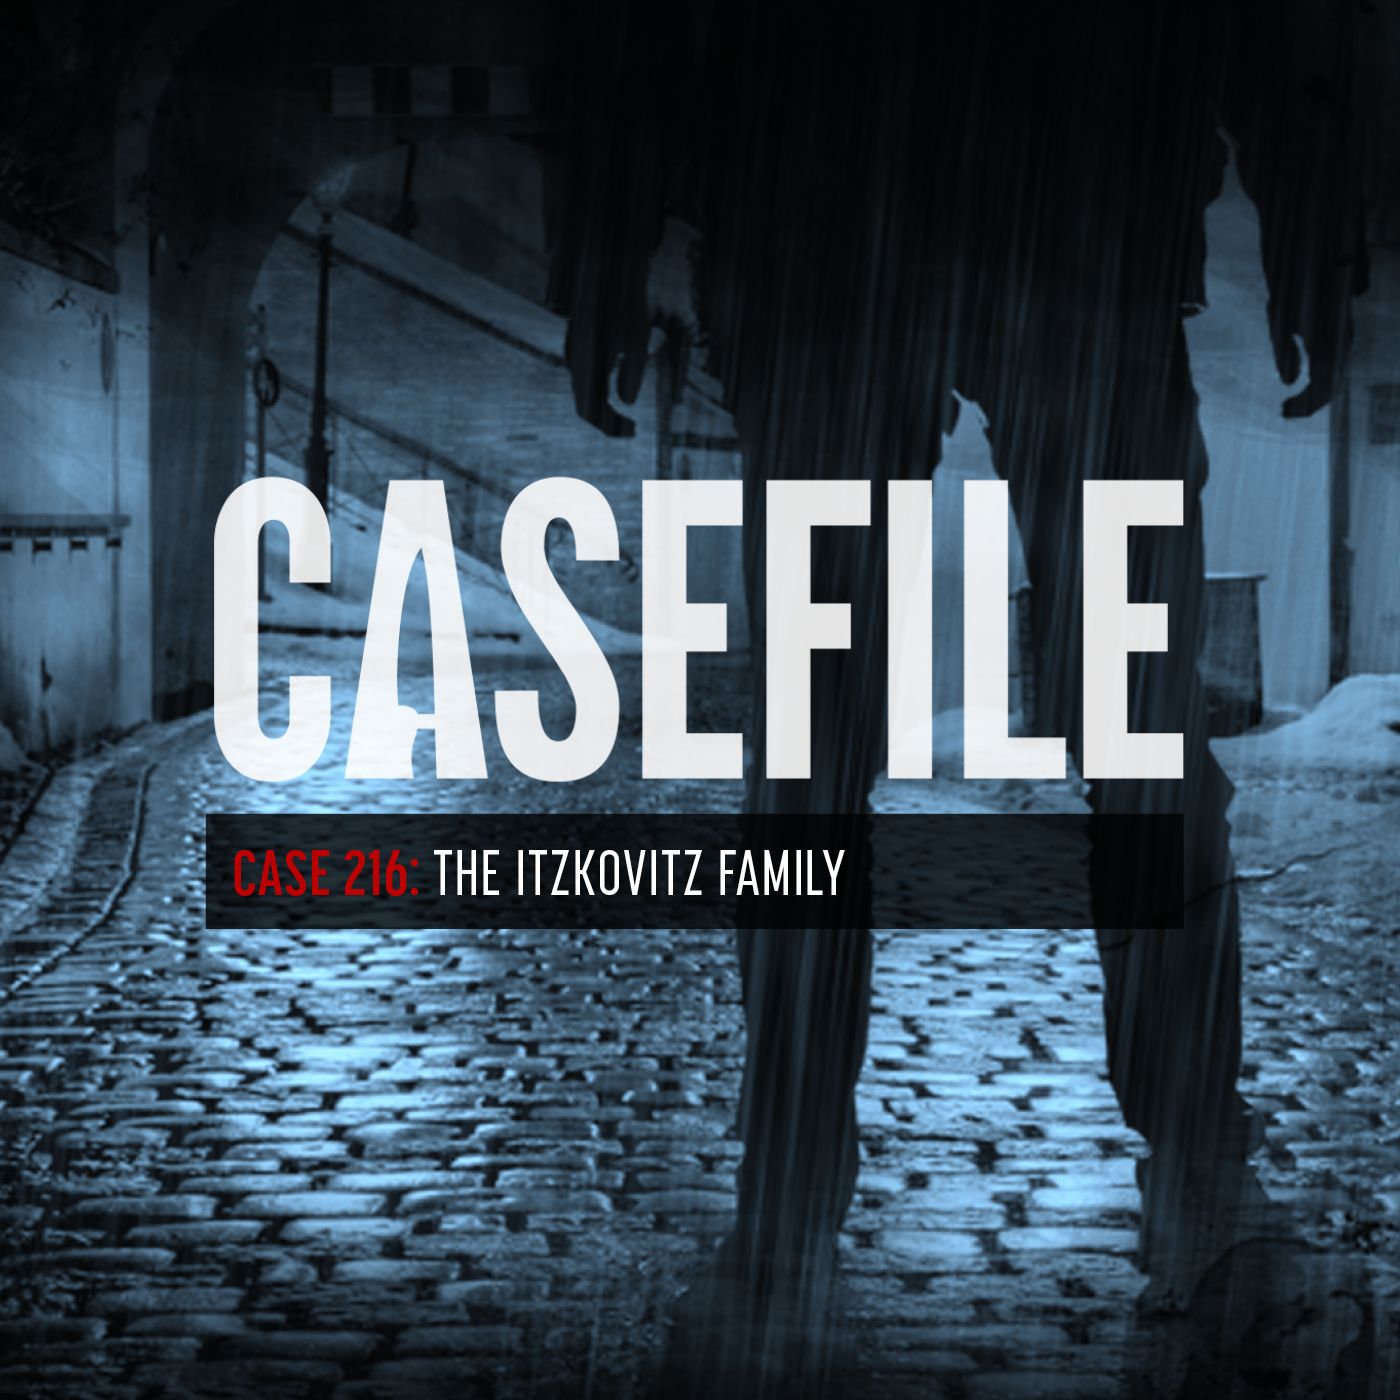 Case 216: The Itzkovitz Family